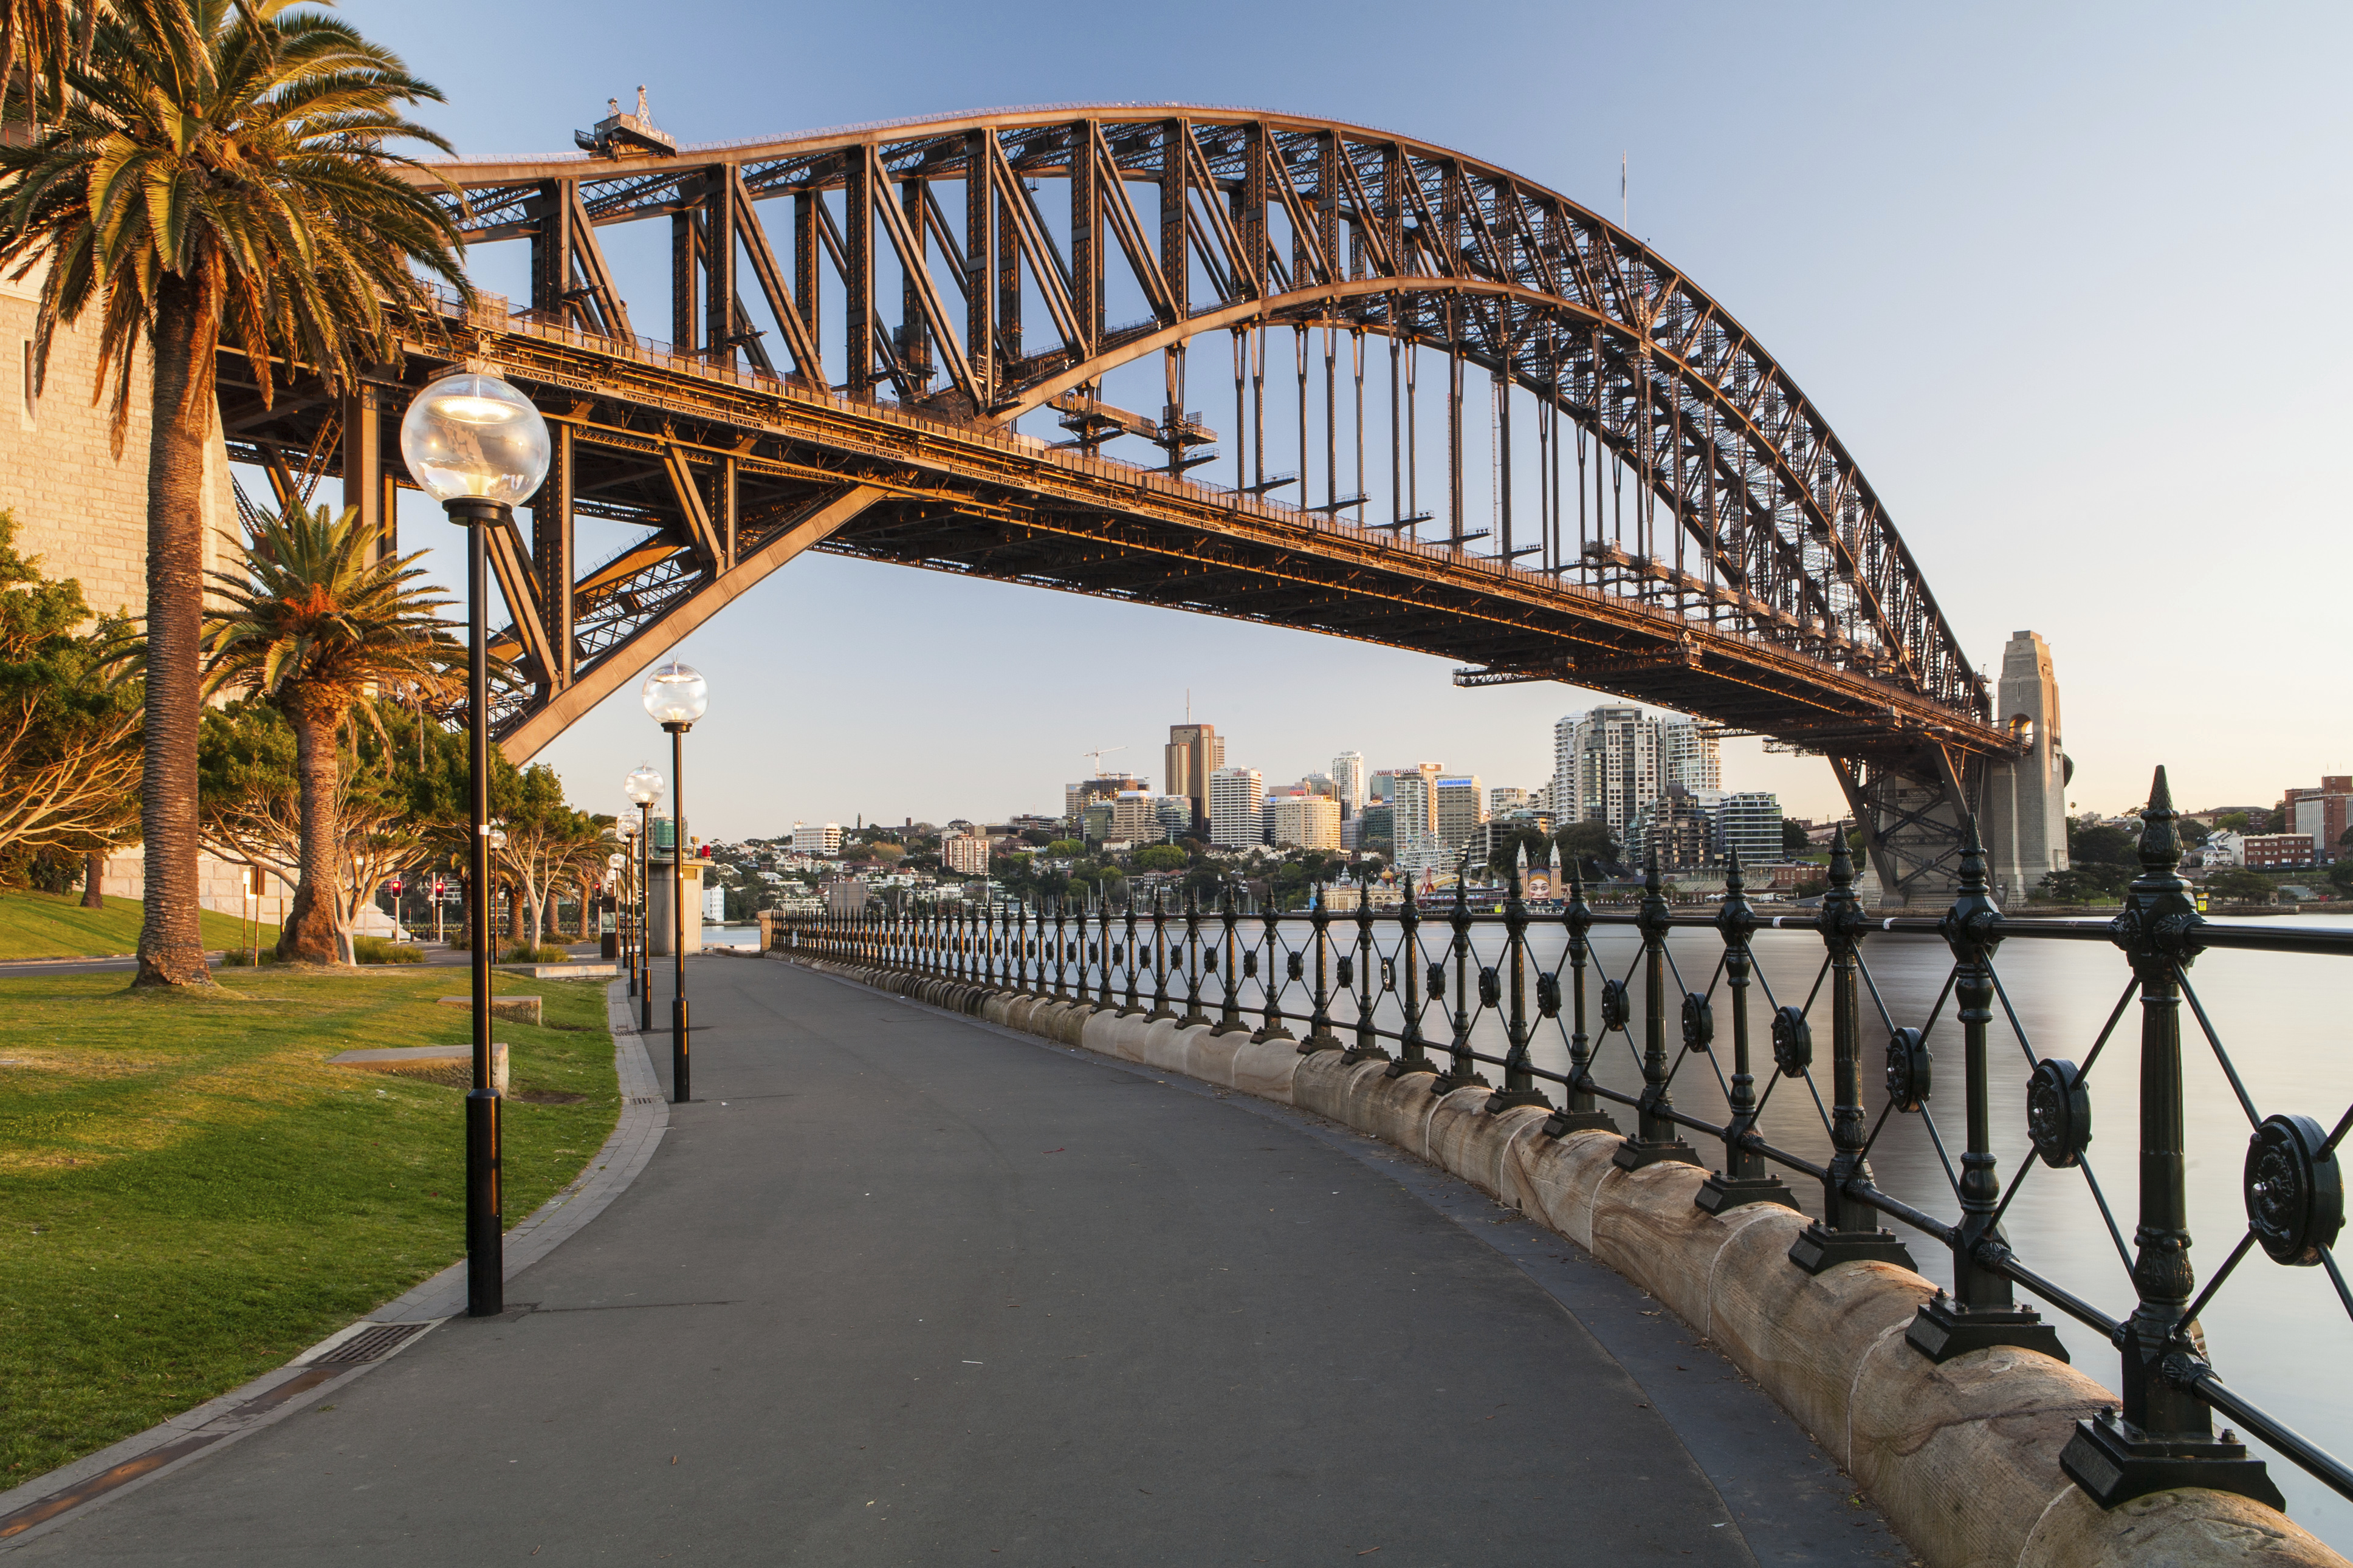 Harbour bridge. Мост Харбор бридж в Австралии. Мост Харбор-бридж в Сиднее. Харбор-бридж достопримечательности Австралии. Харбор-бридж экскурсия.